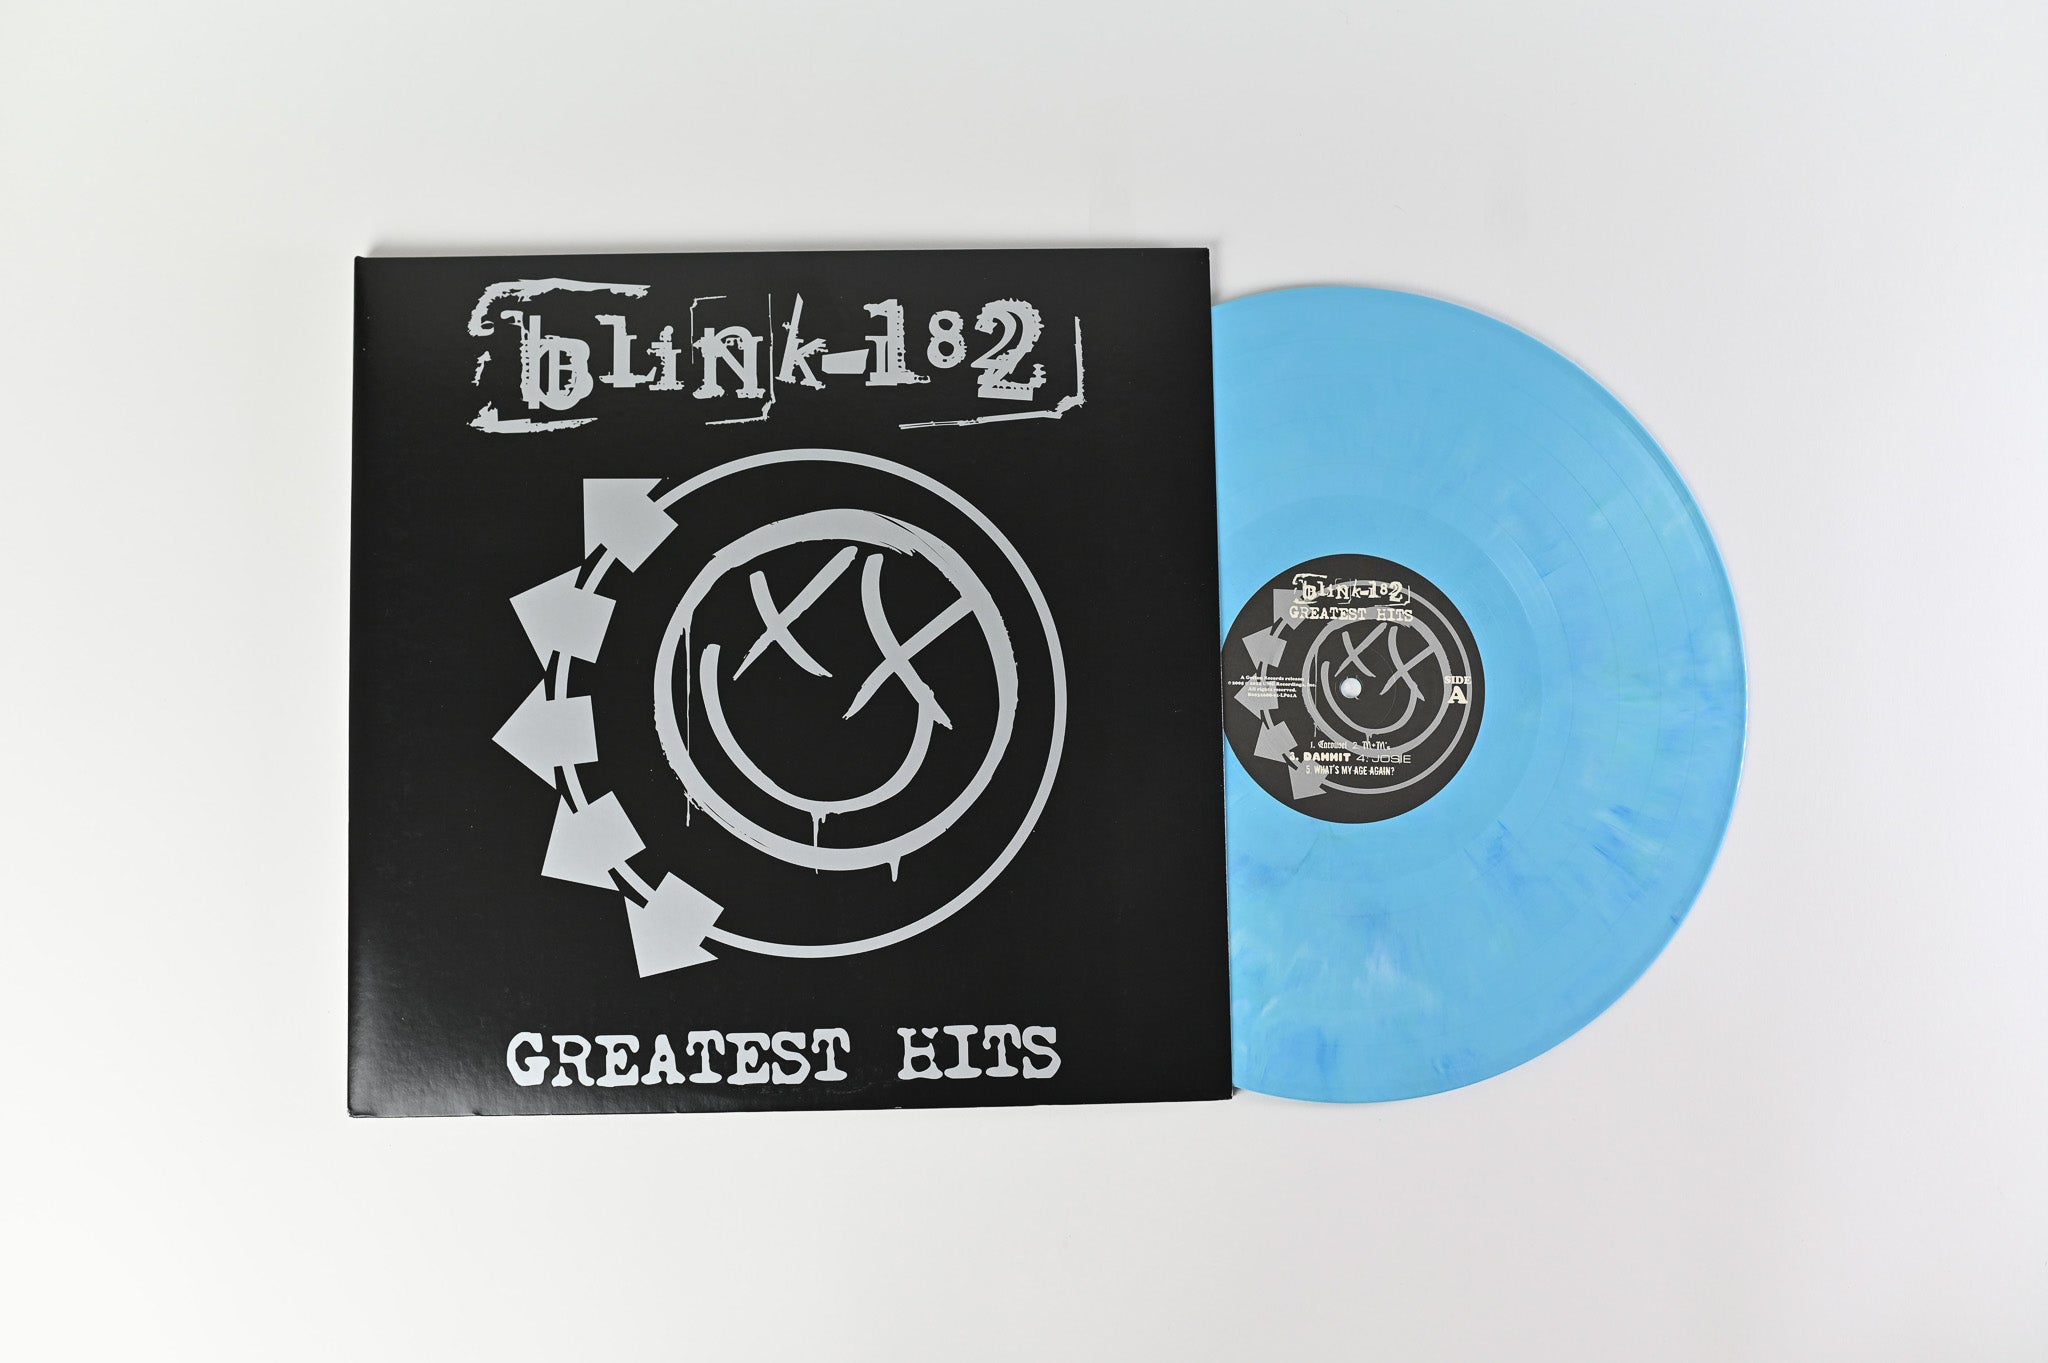 Blink-182 - Greatest Hits Reissue on Blue & Green Marble Vinyl on Geffen Records